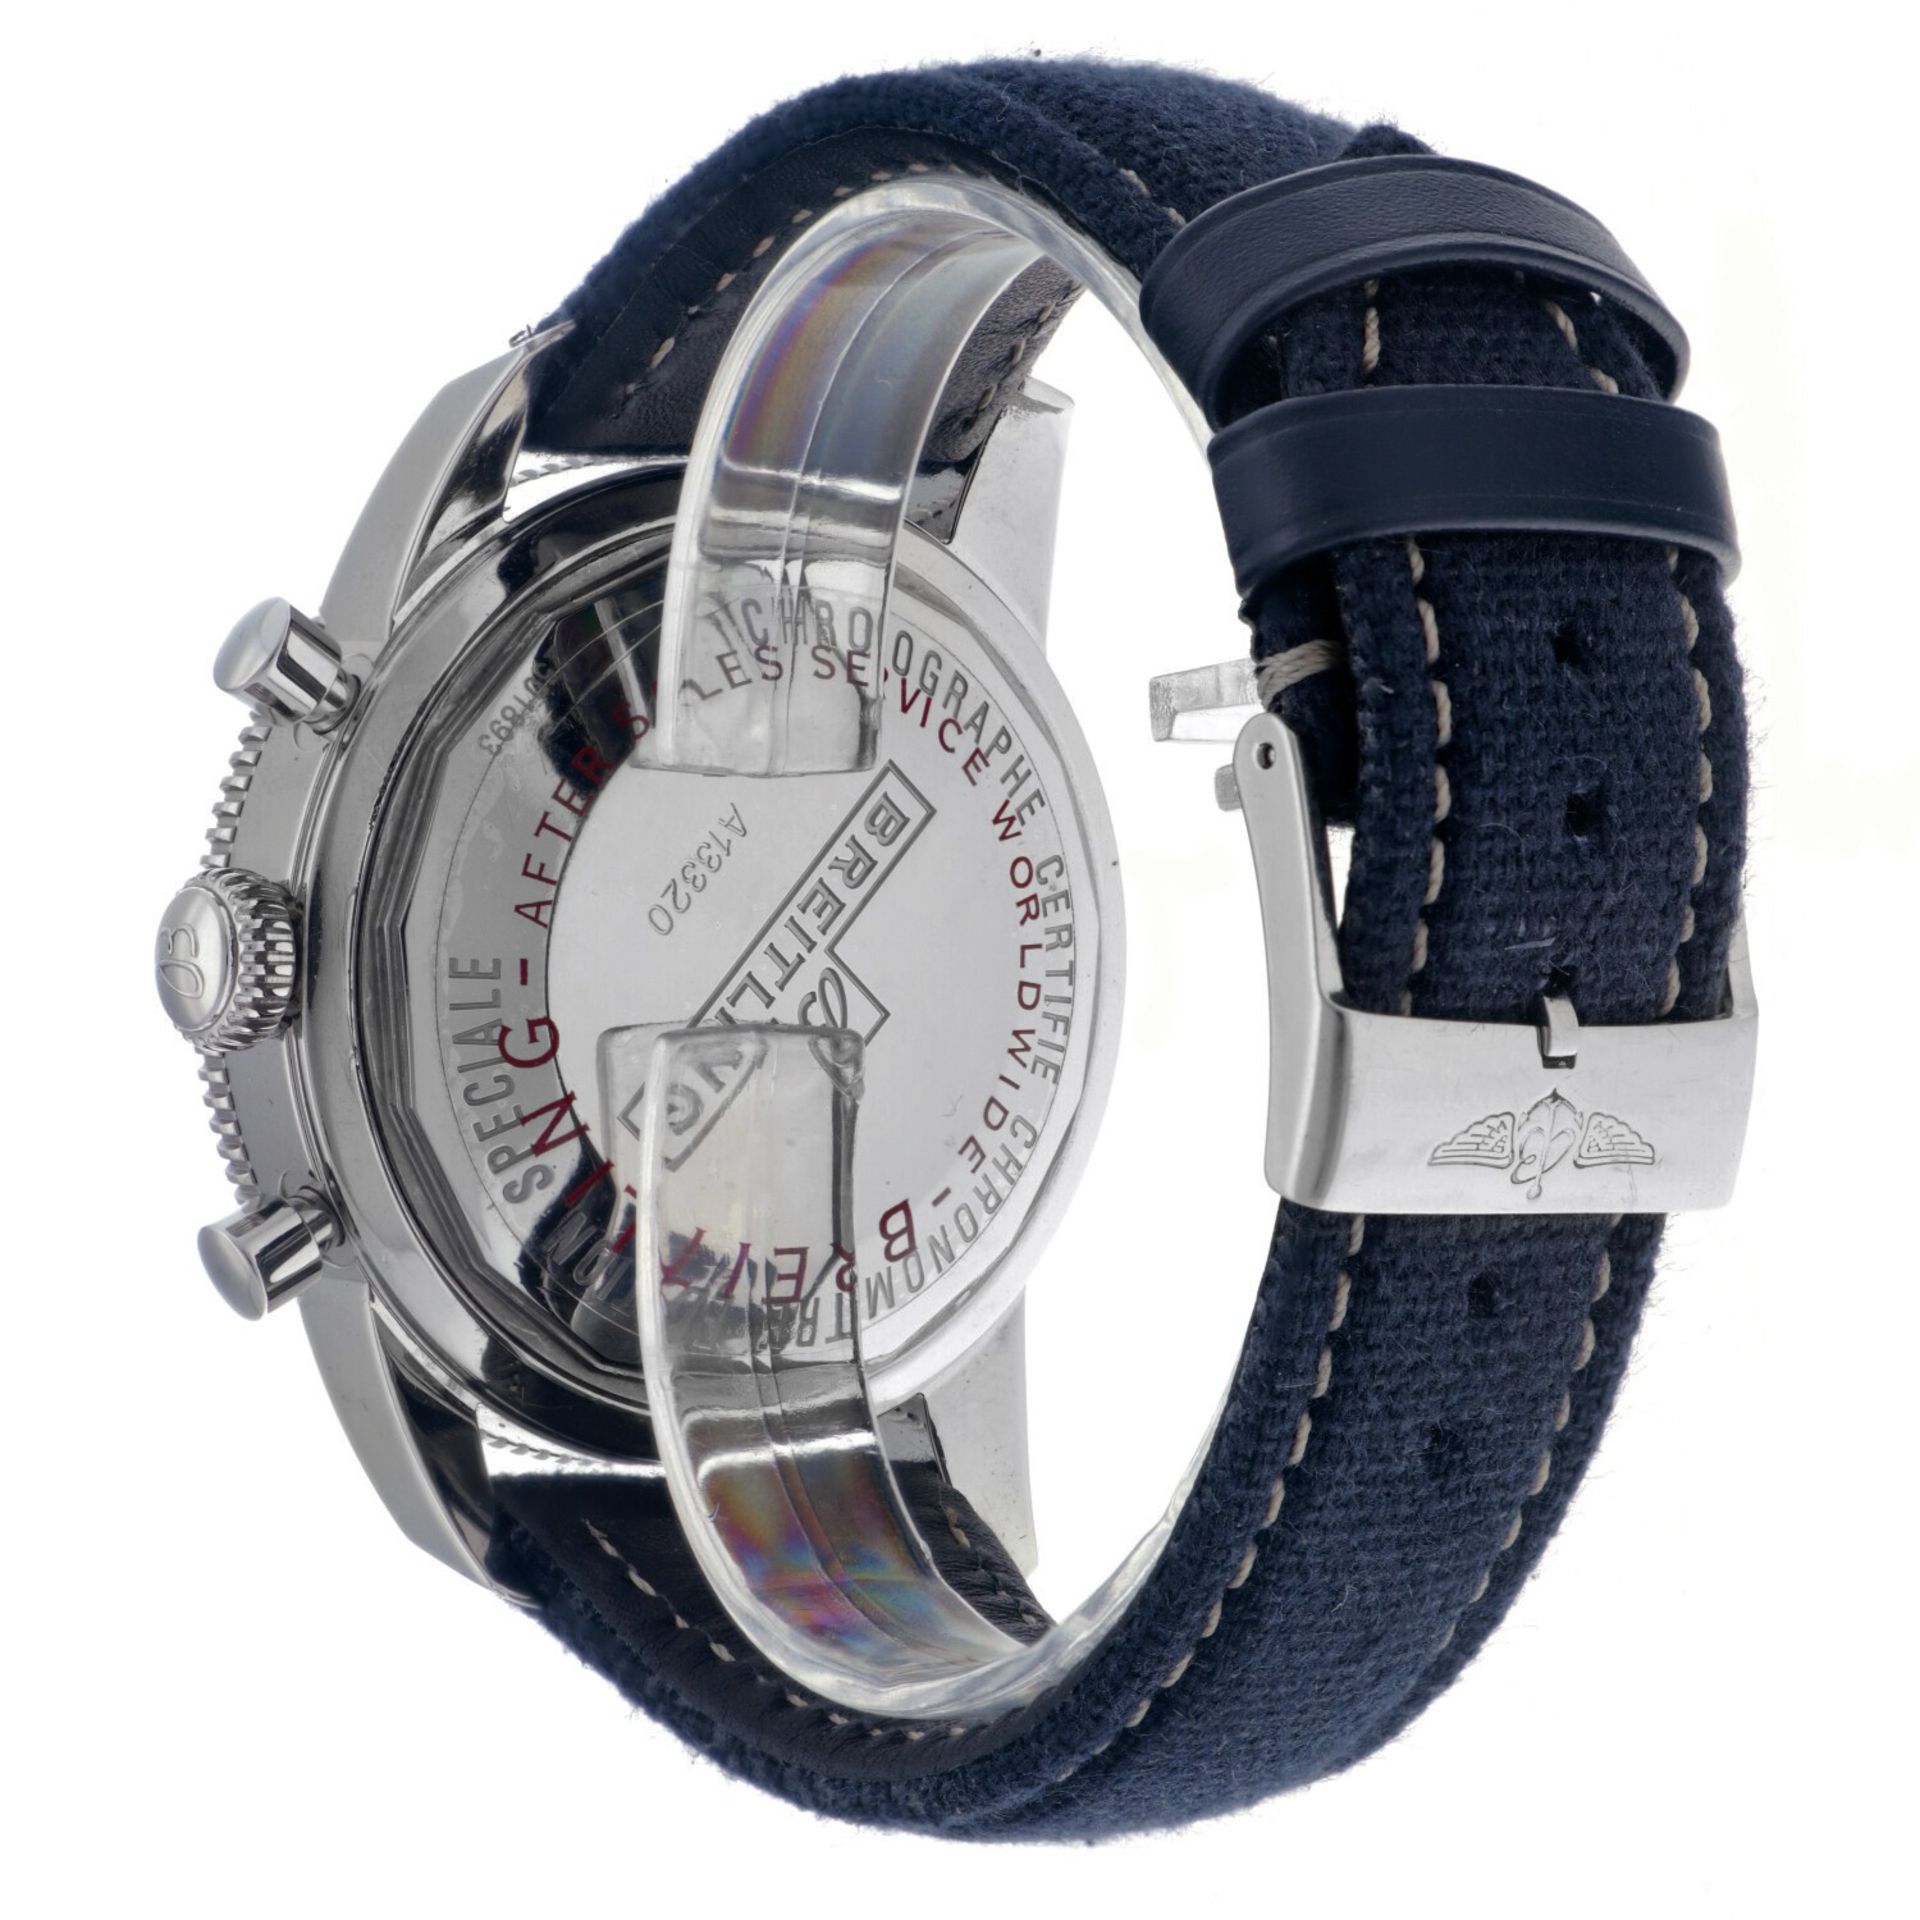 Breitling Superocean A13320 - Men's watch. - Image 3 of 6